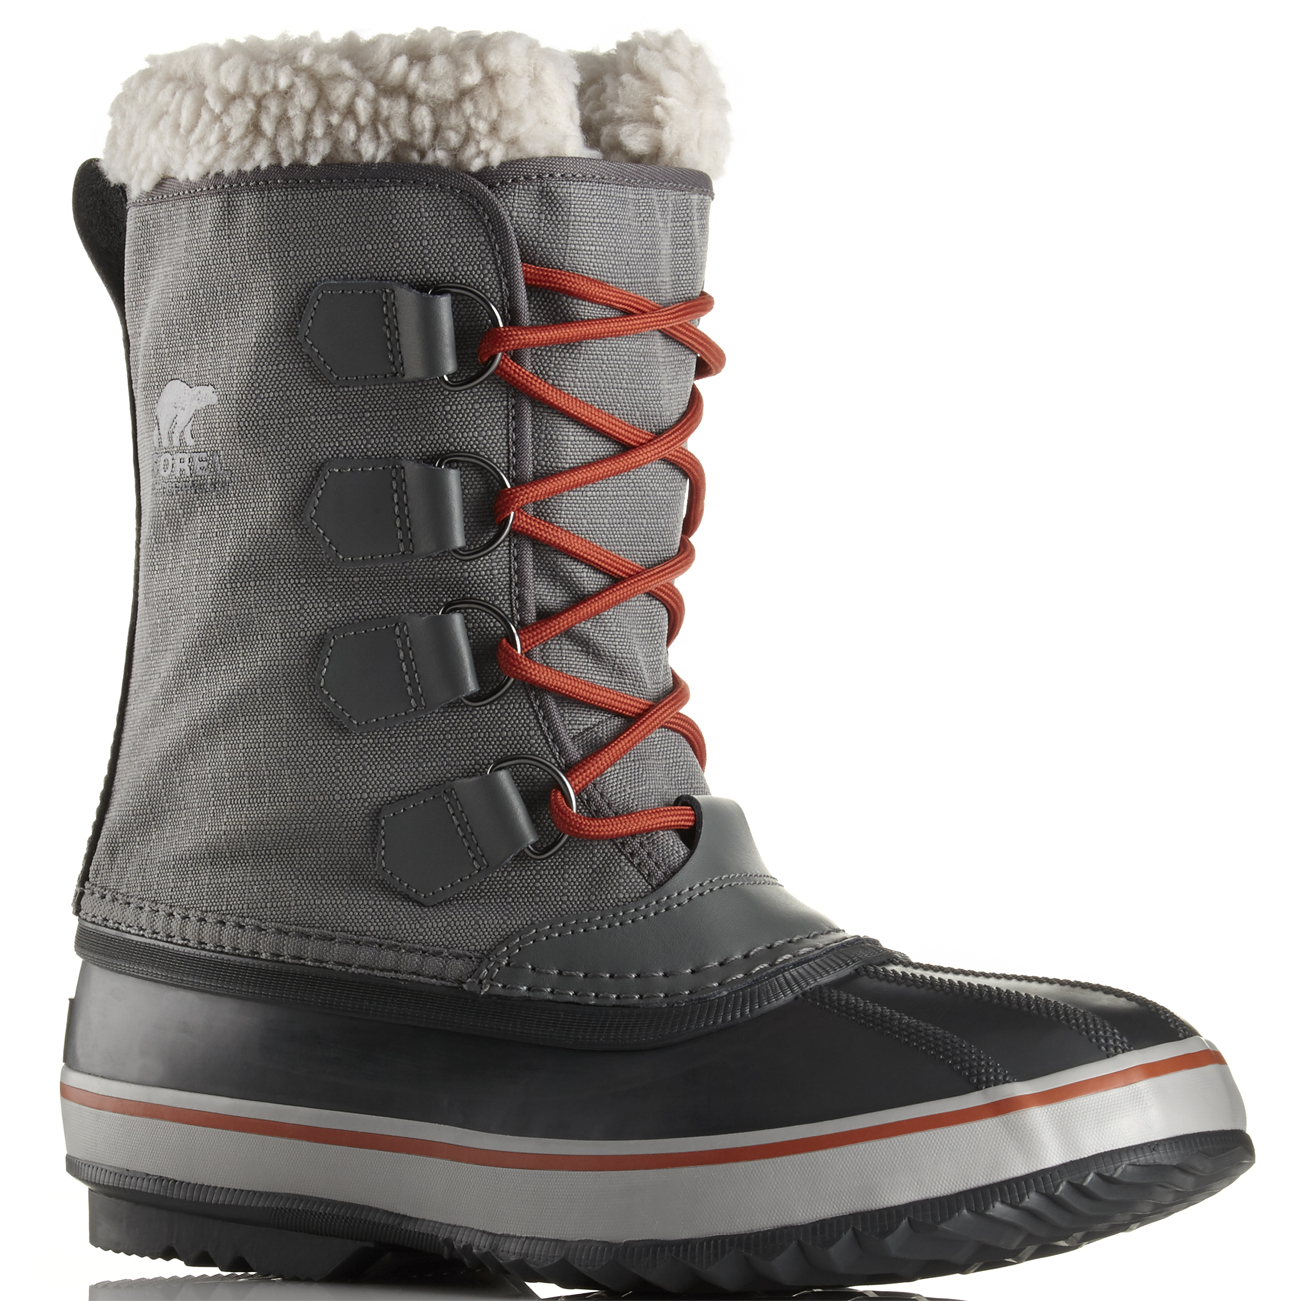 waterproof walking boots mens-sorel-1964-pac-nylon-hiking-winter-snow- ISDNRZR